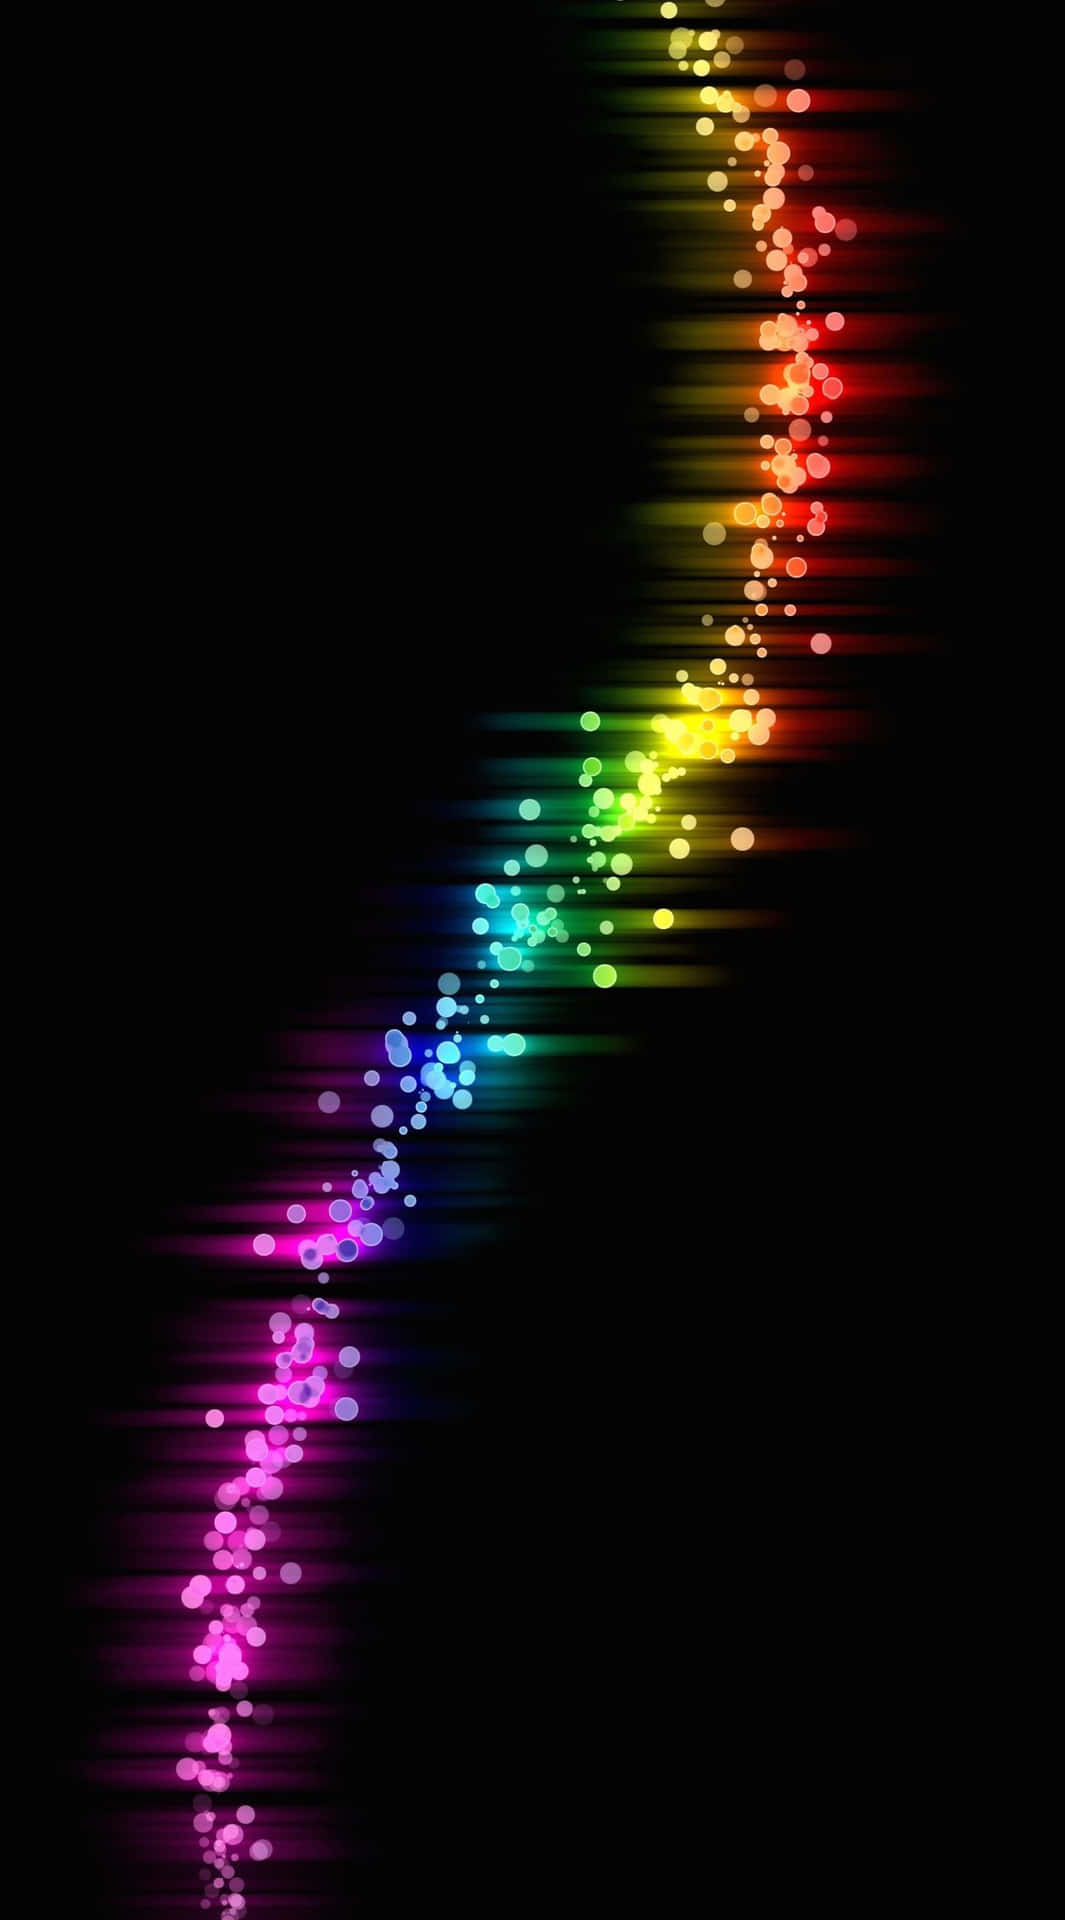 Sort Rainbow 1438 X 2592 Wallpaper